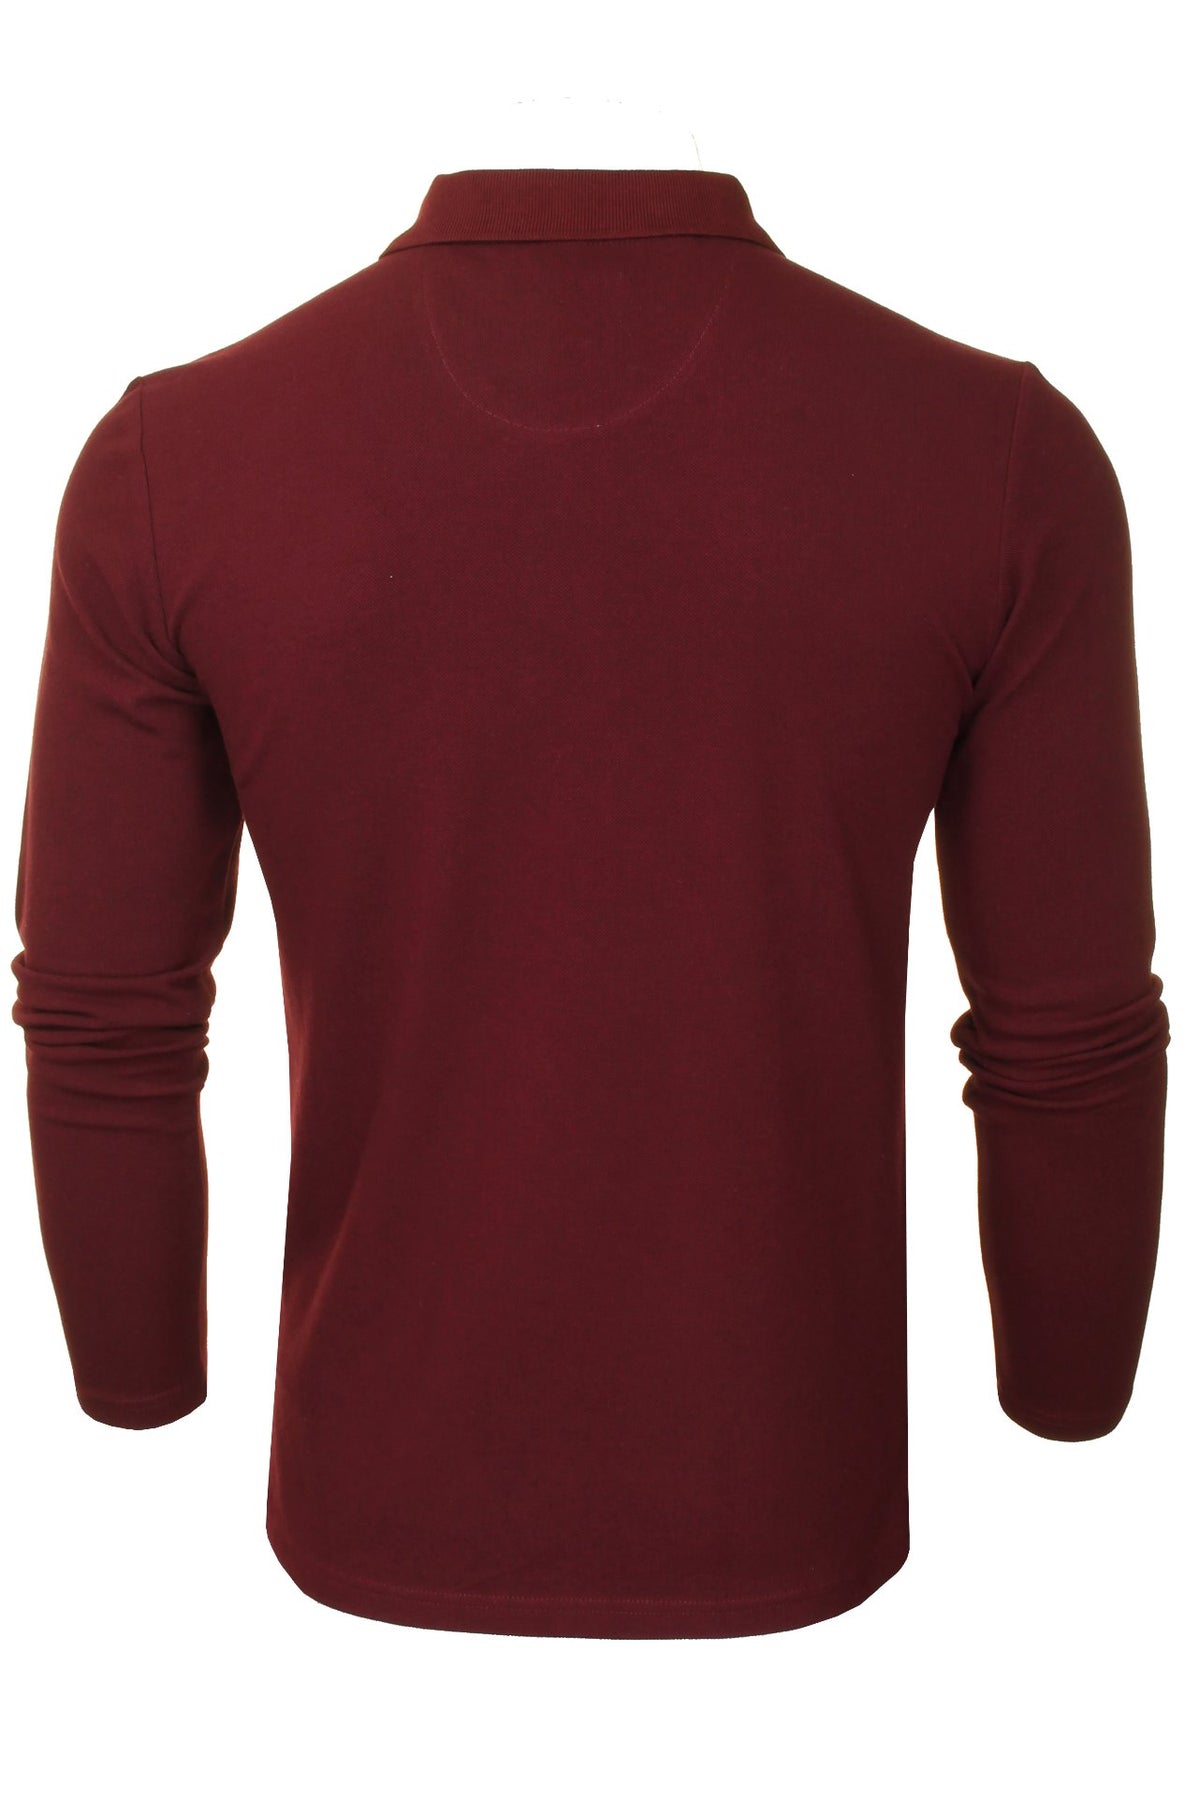 Xact Mens Polo T-Shirt Pique Long Sleeved, 03, XP1003, Burgundy